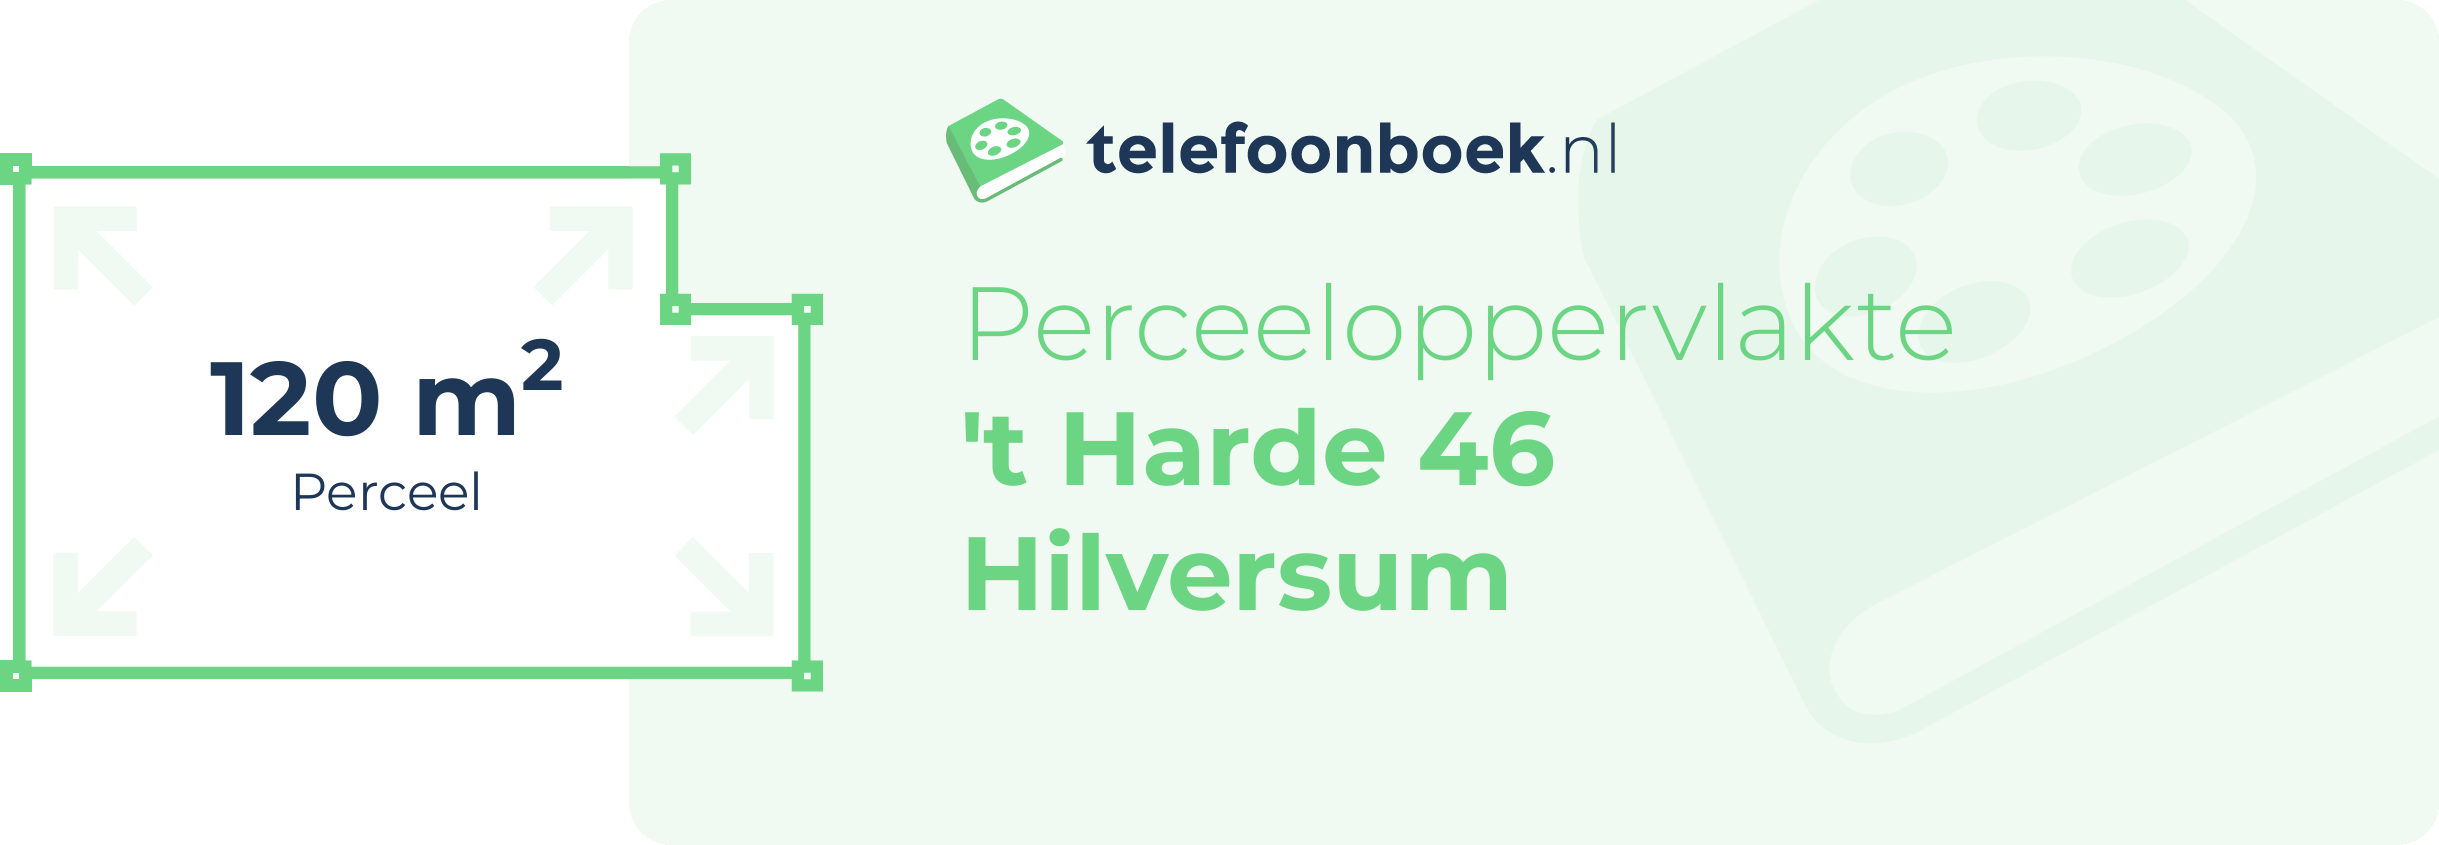 Perceeloppervlakte 't Harde 46 Hilversum